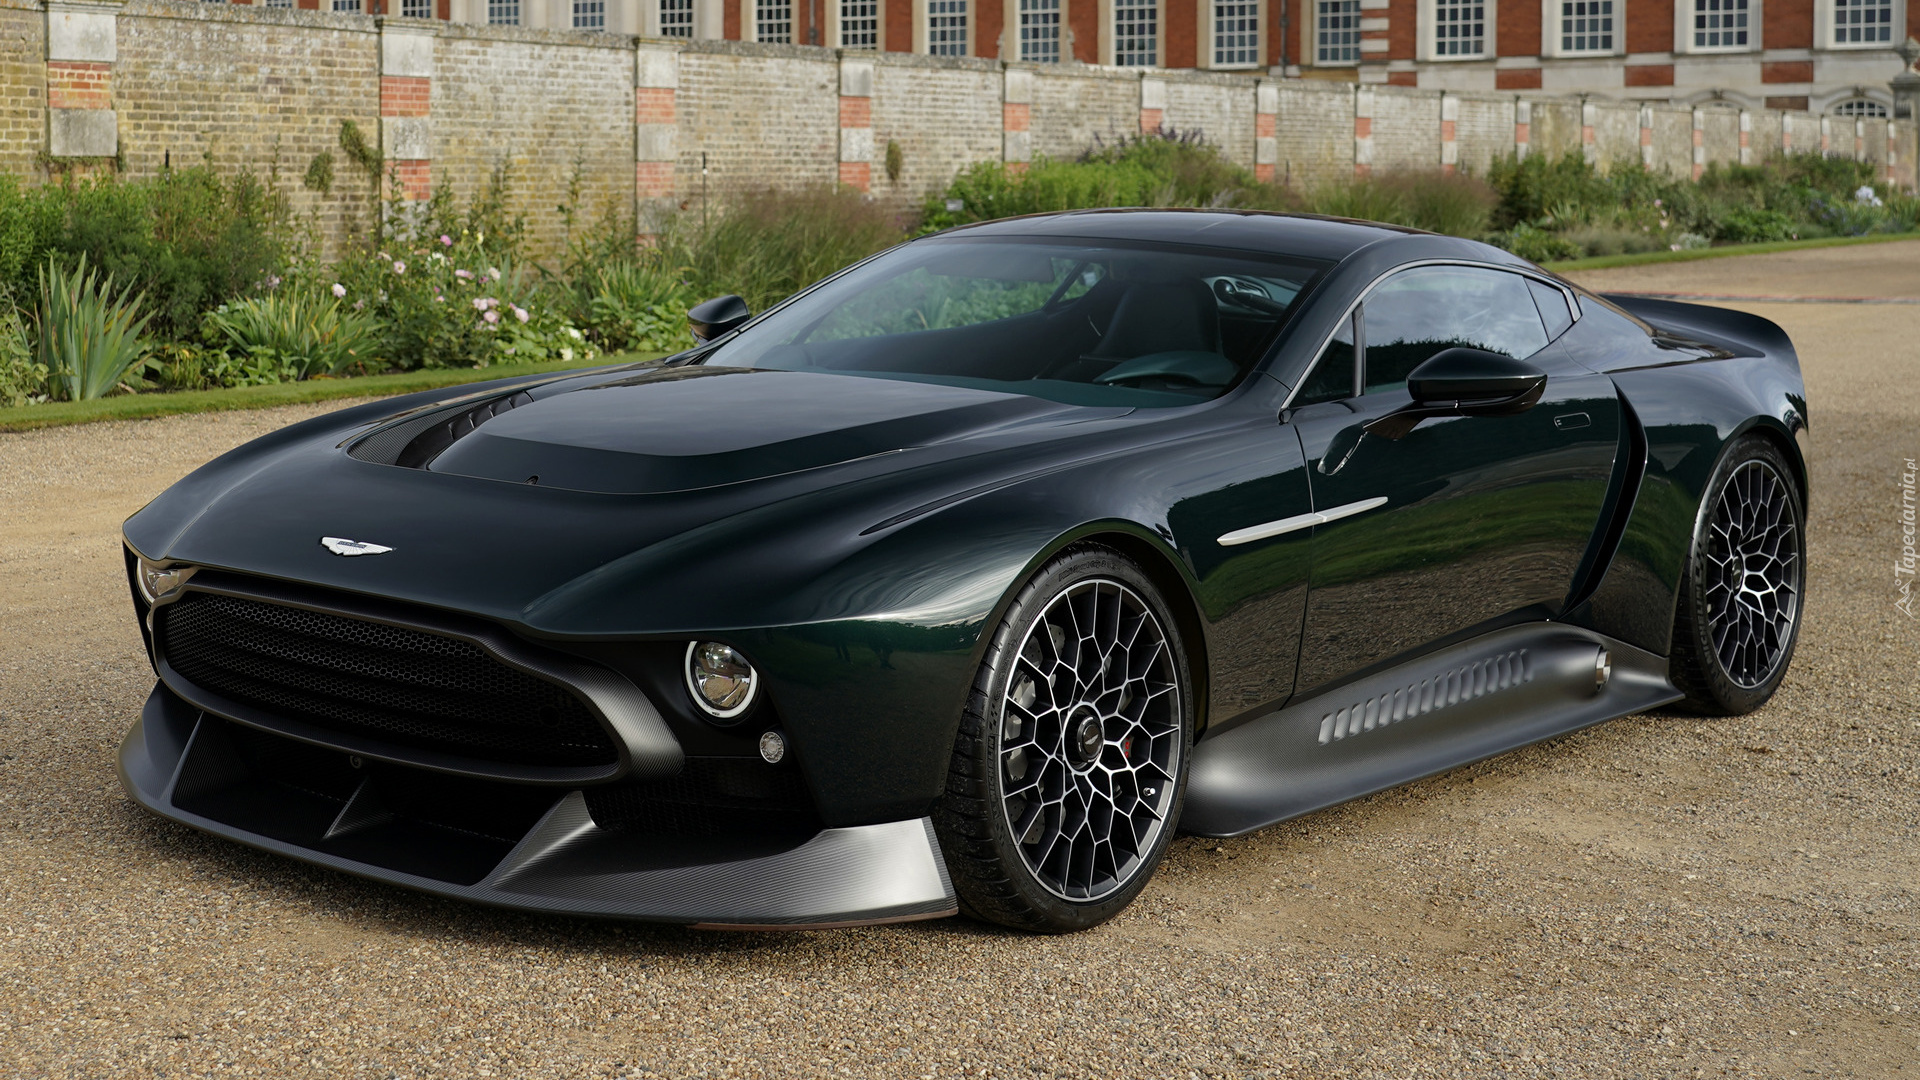 Aston Martin Victor, 2020